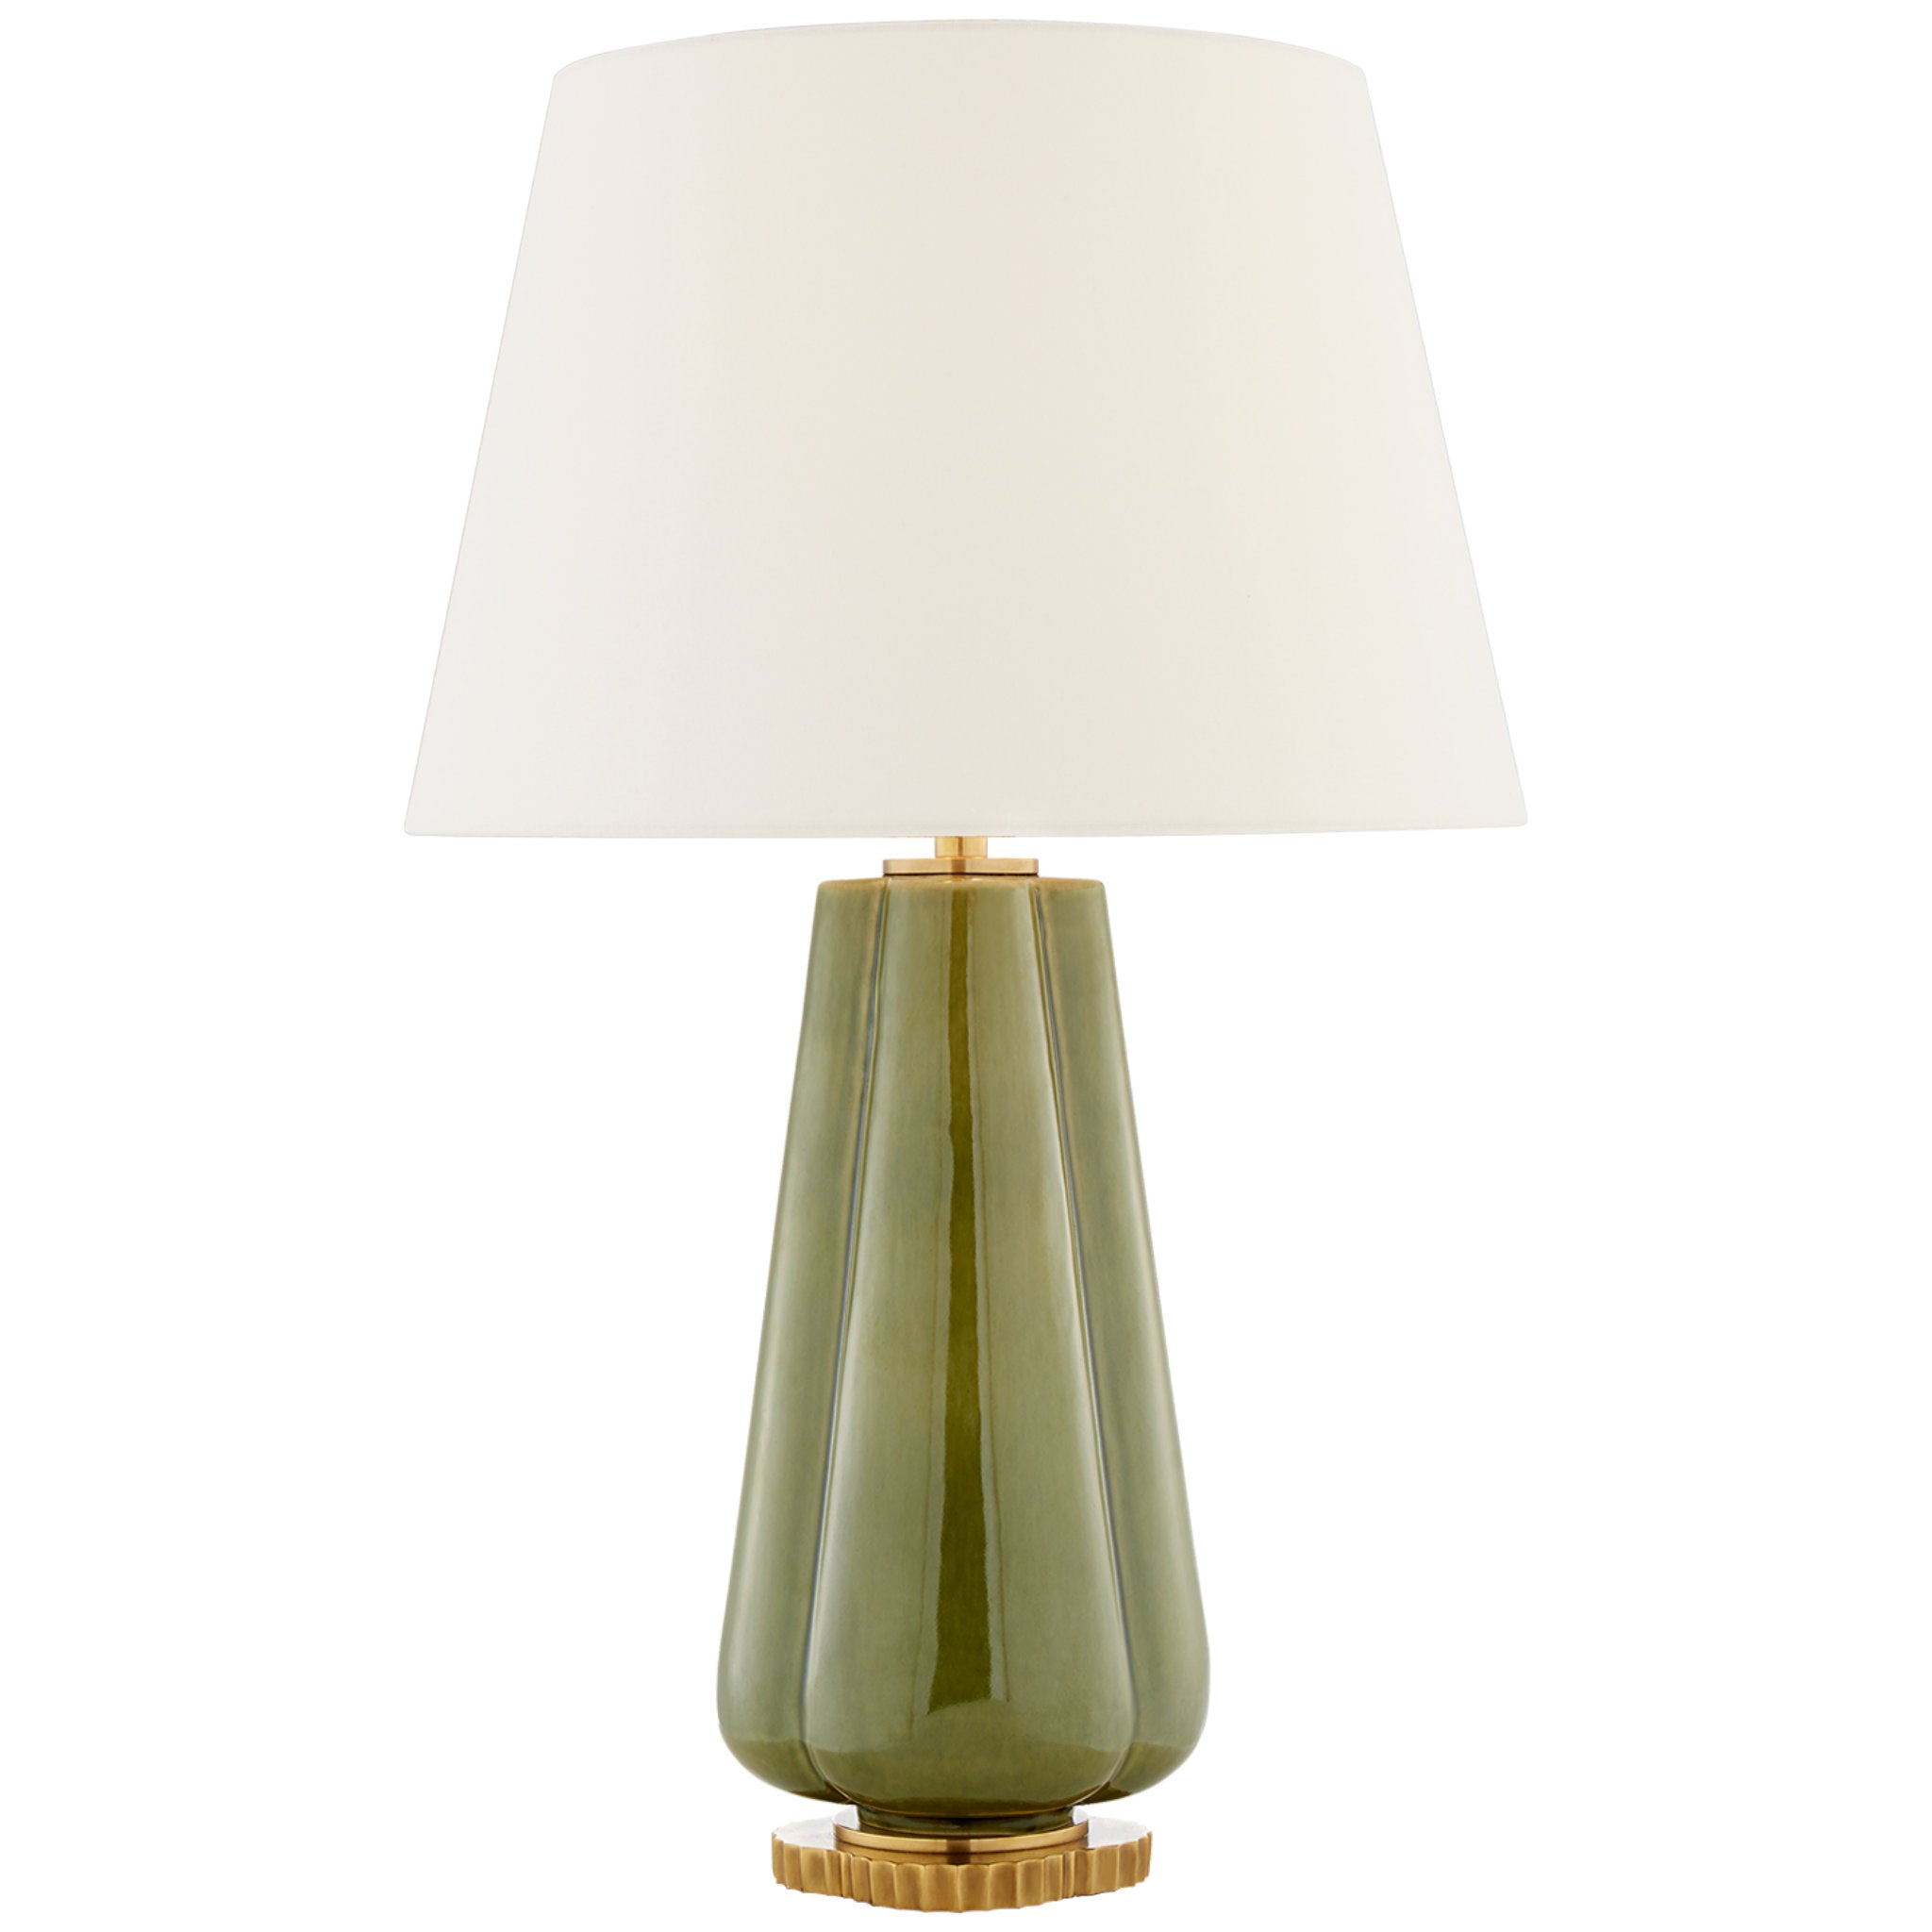 Alexa Hampton Penelope Table Lamp in Green with Linen Shade